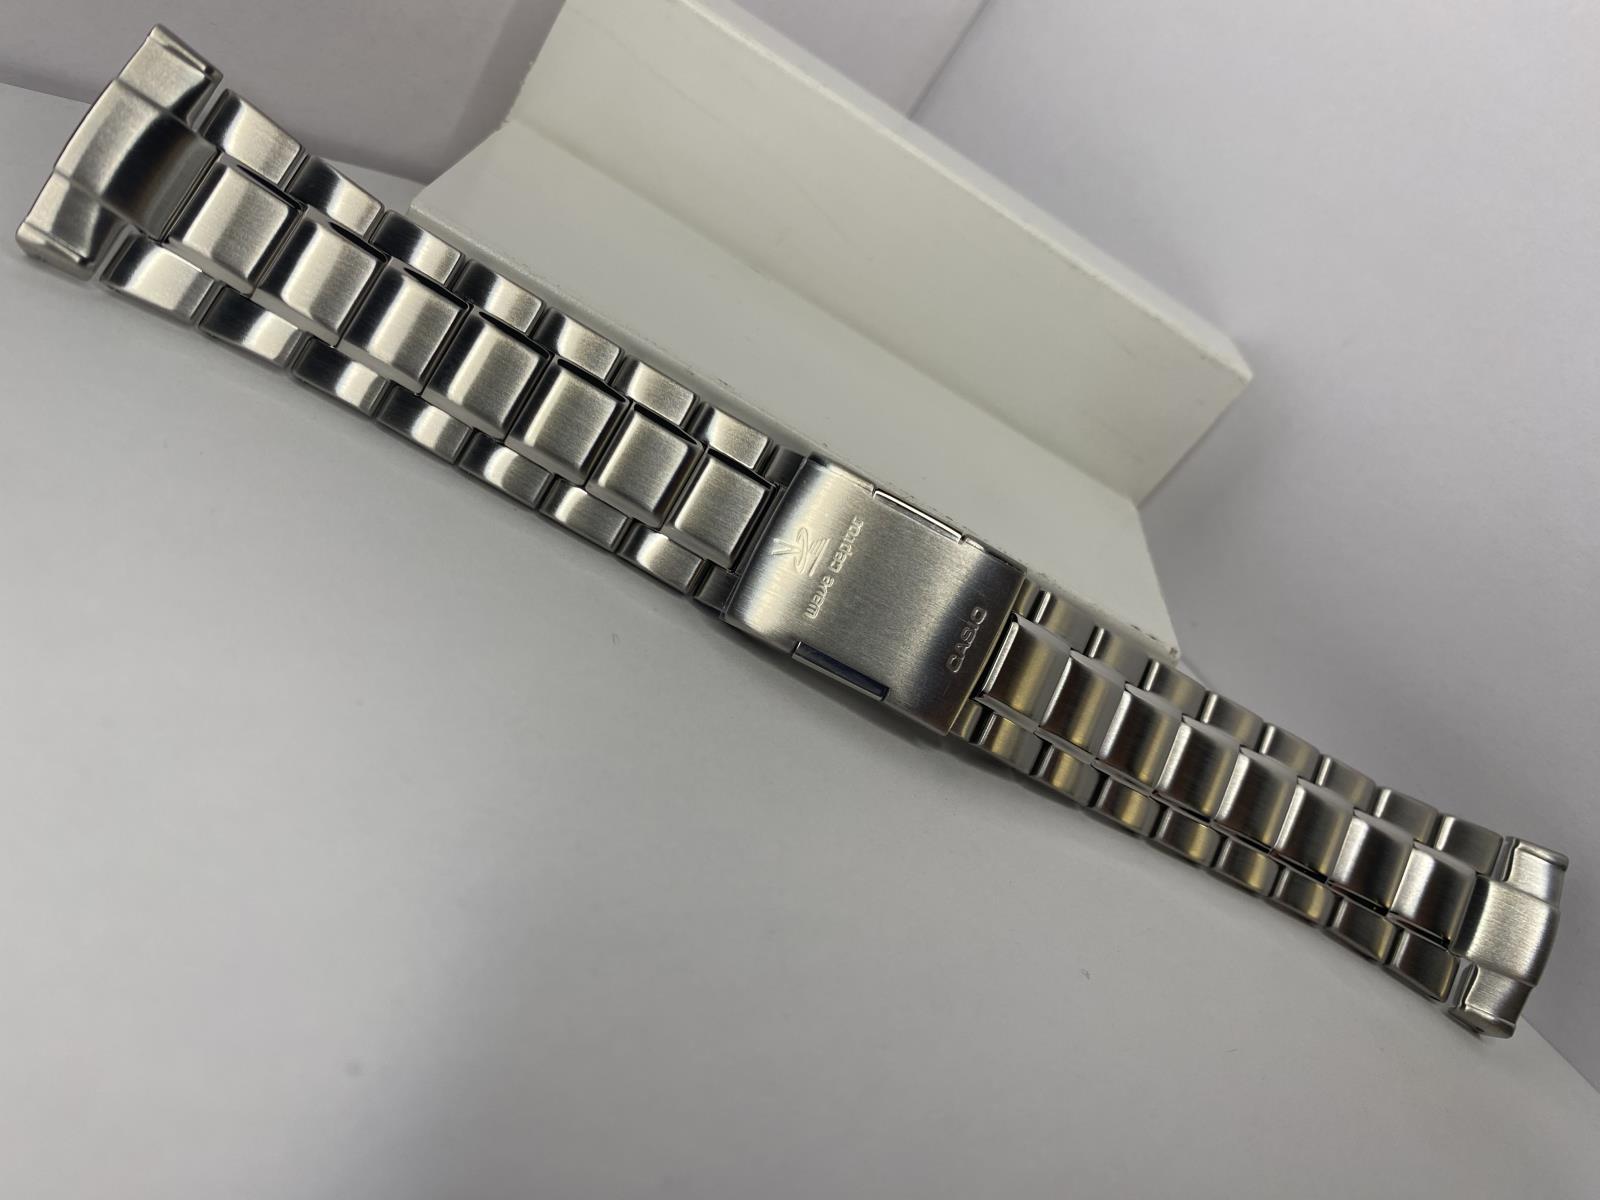 Casio Original Watchband Bracelet WVA-430 Steel Band Only. W/O Cover End Piece